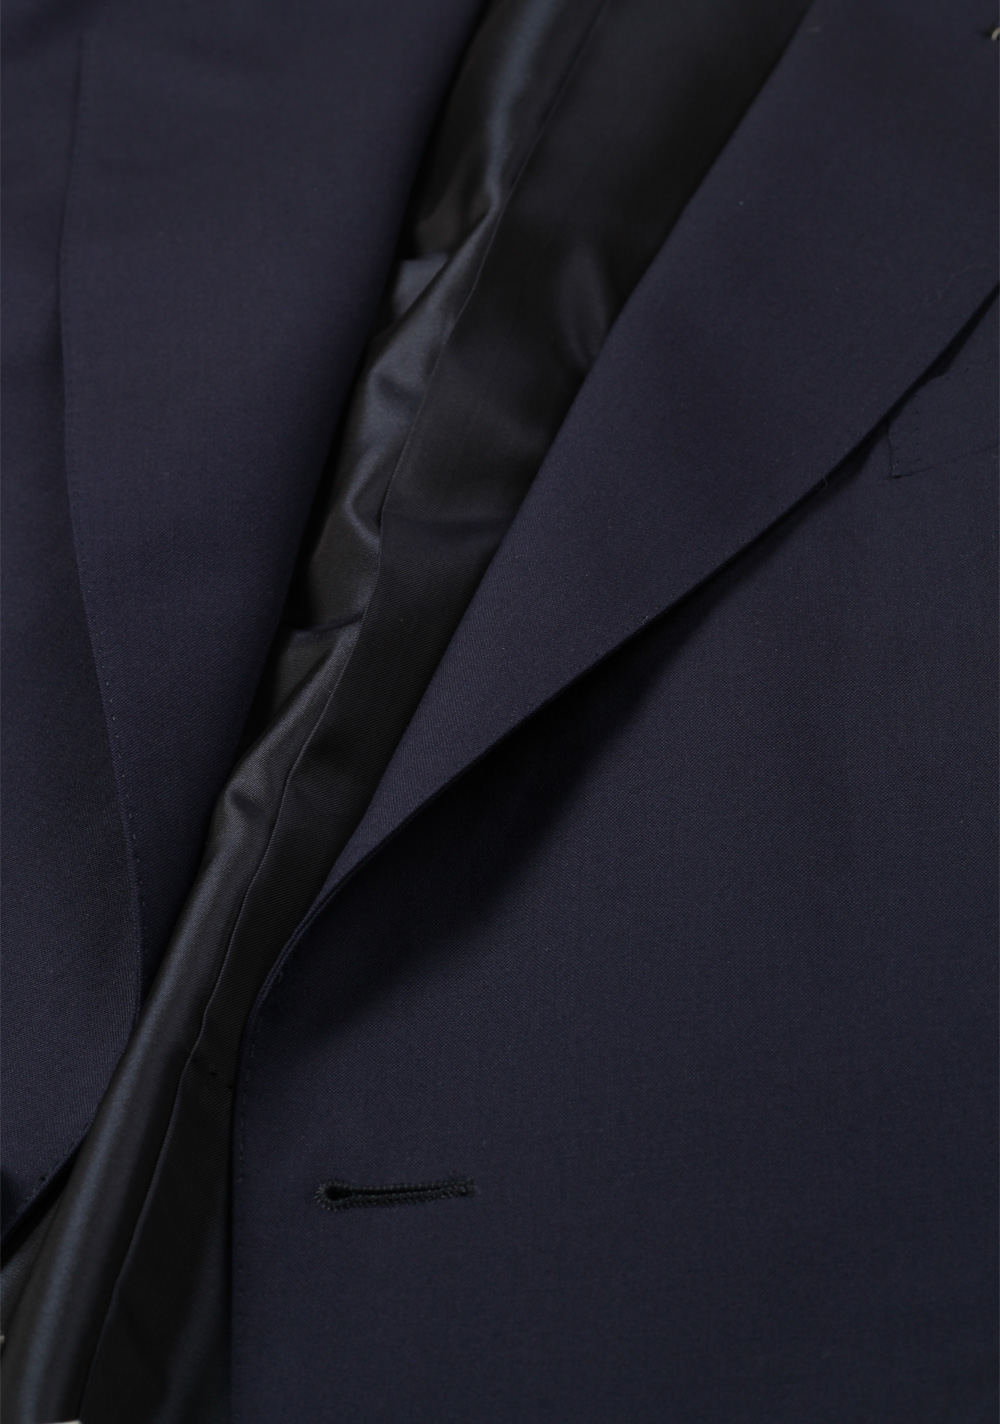 TOM FORD Windsor Blue Suit Size 56 / 46R U.S. Wool Fit A | Costume Limité